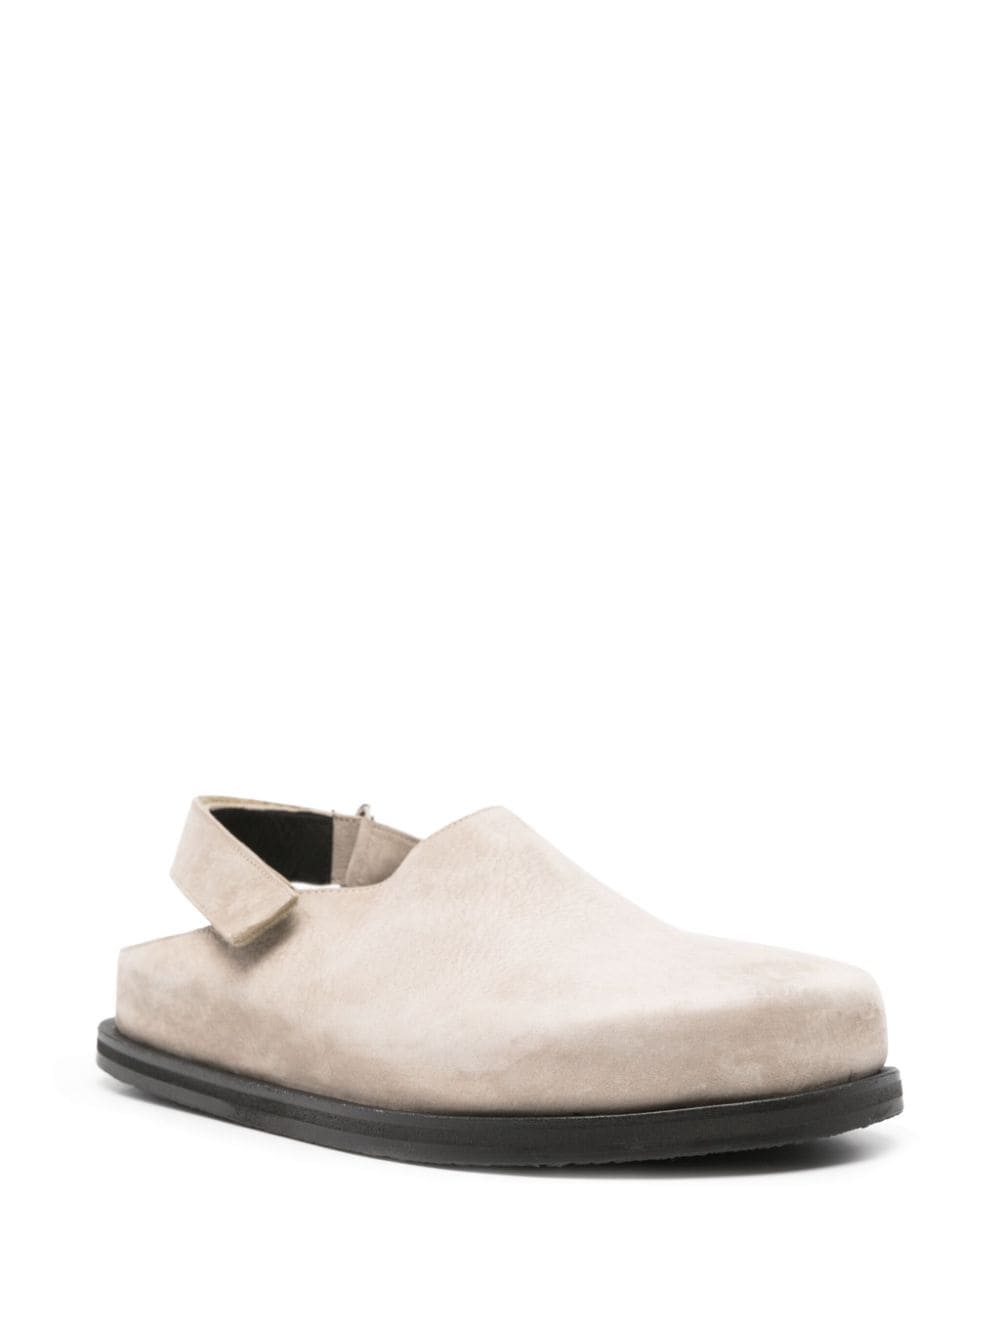 Studio Nicholson leather slippers - Beige